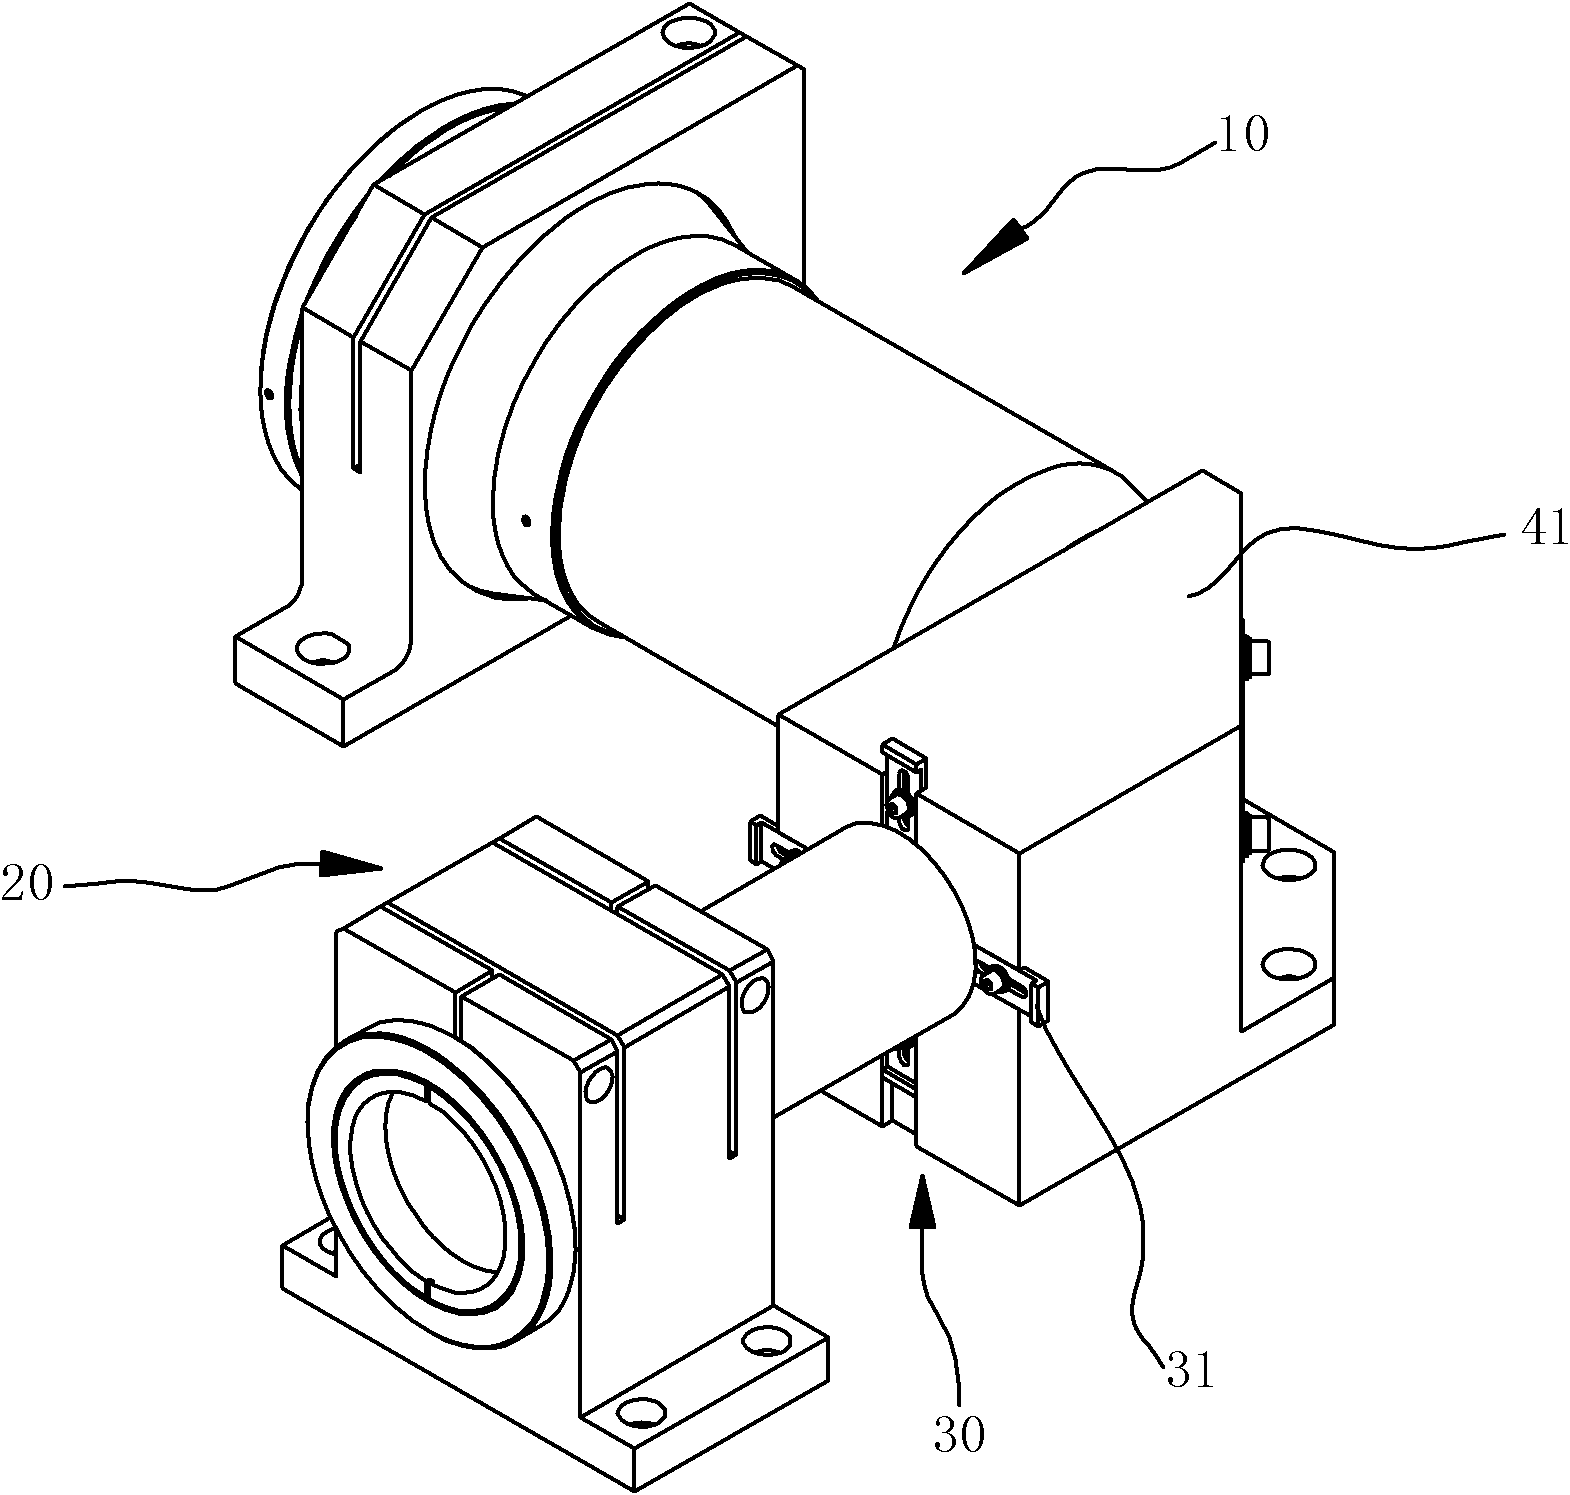 Telecentric imaging lens used in calliper